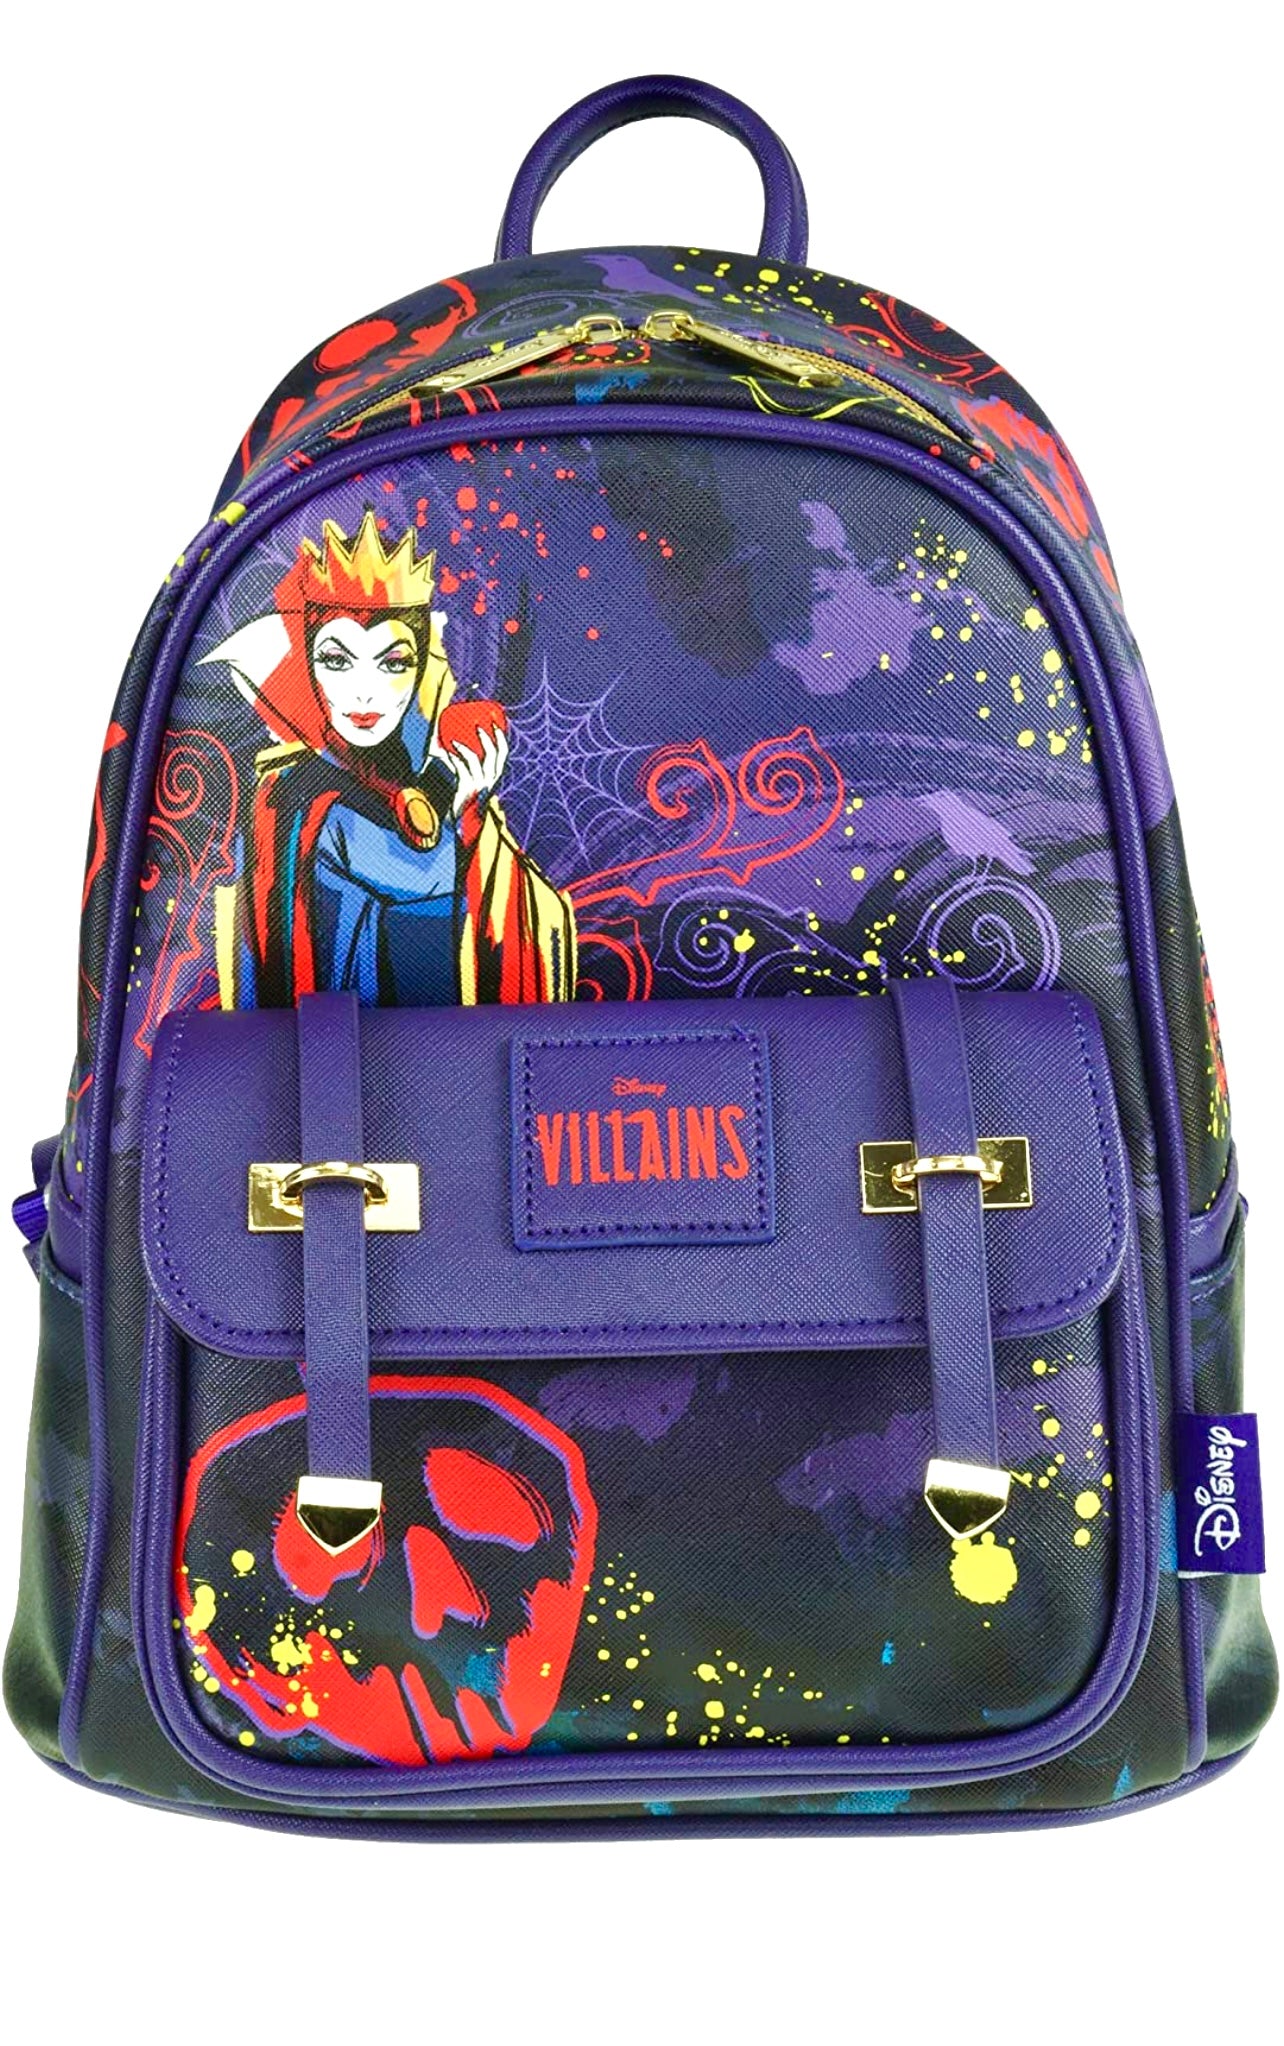 Villains - Evil Queen Purple Vegan Leather Backpack